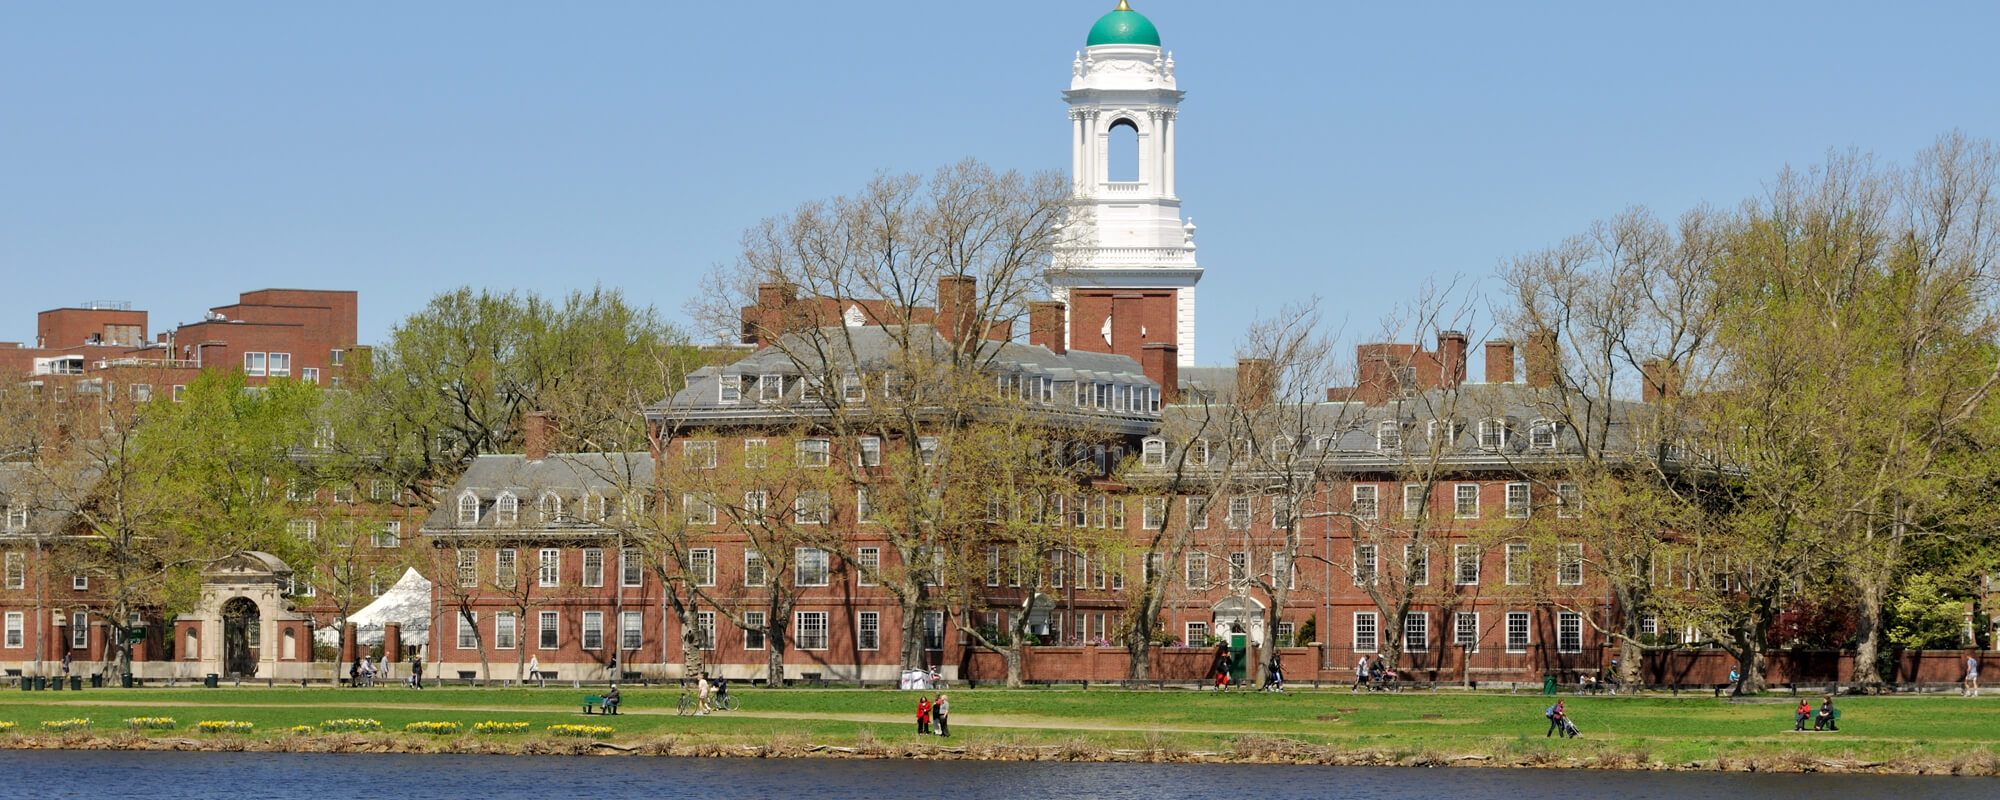 Harvard University Campus | Schools | Command Education